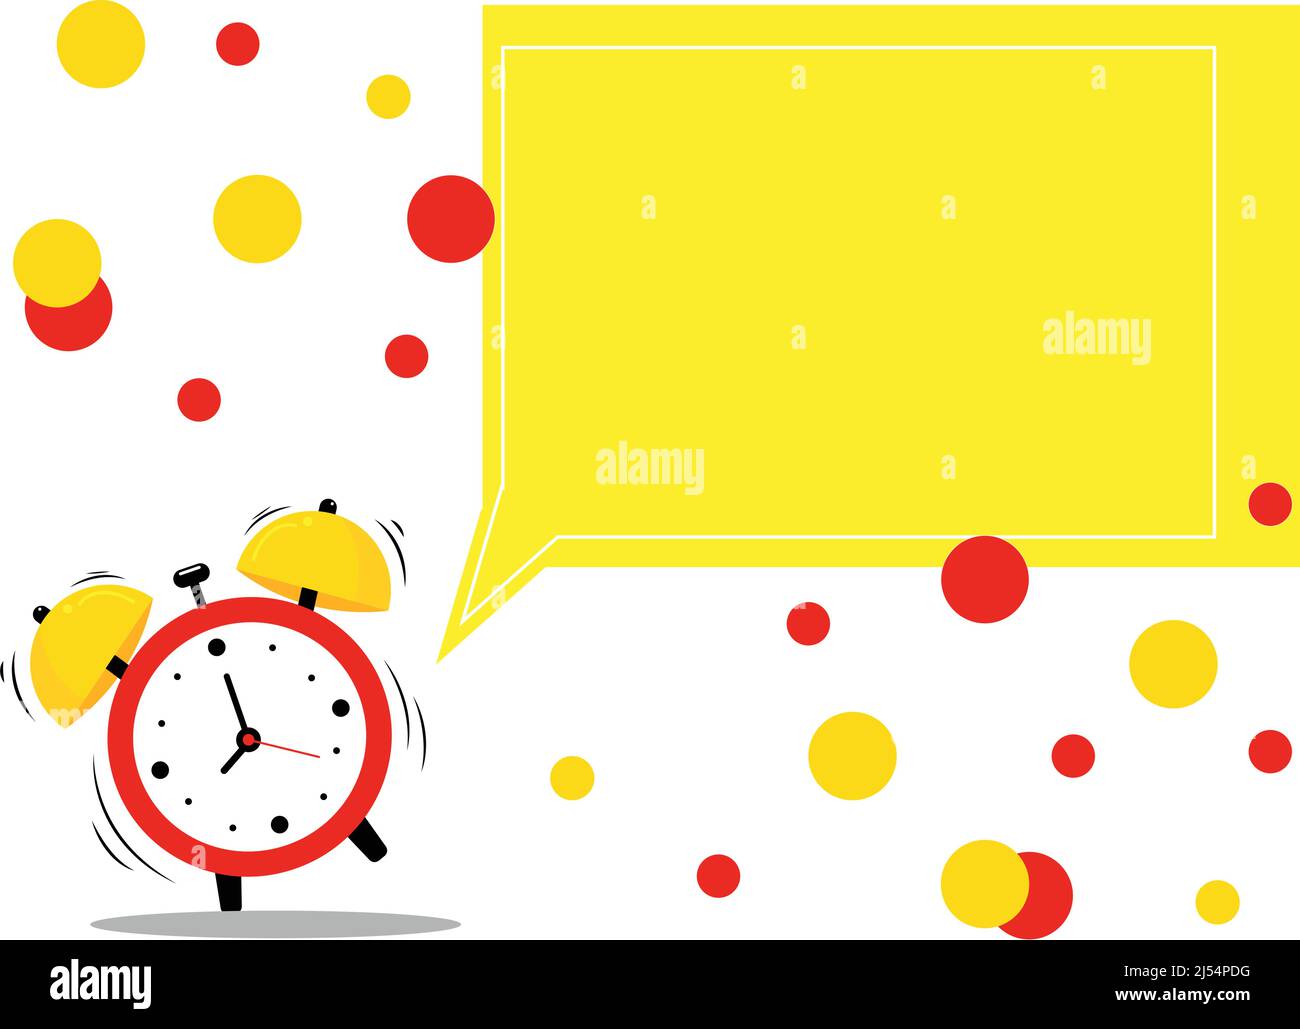 illustration of alarm clock near yellow speech bubble,stock image Stock Vector